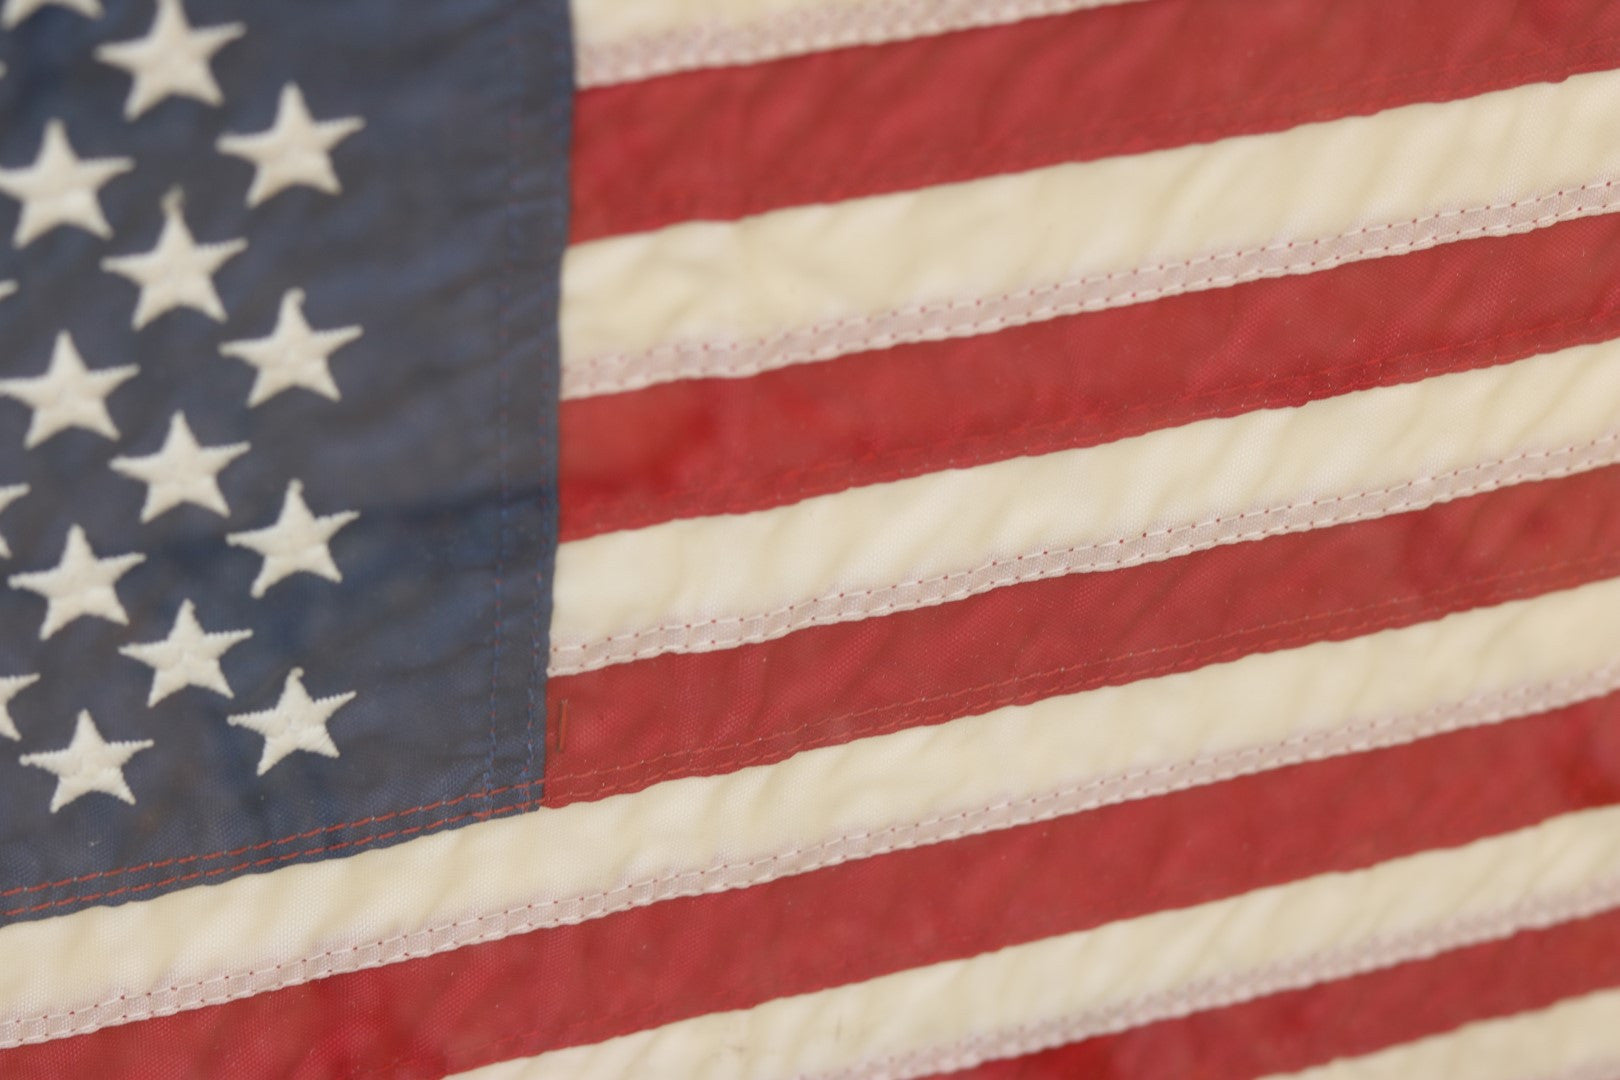 Framed American Flag - Lannan Gallery